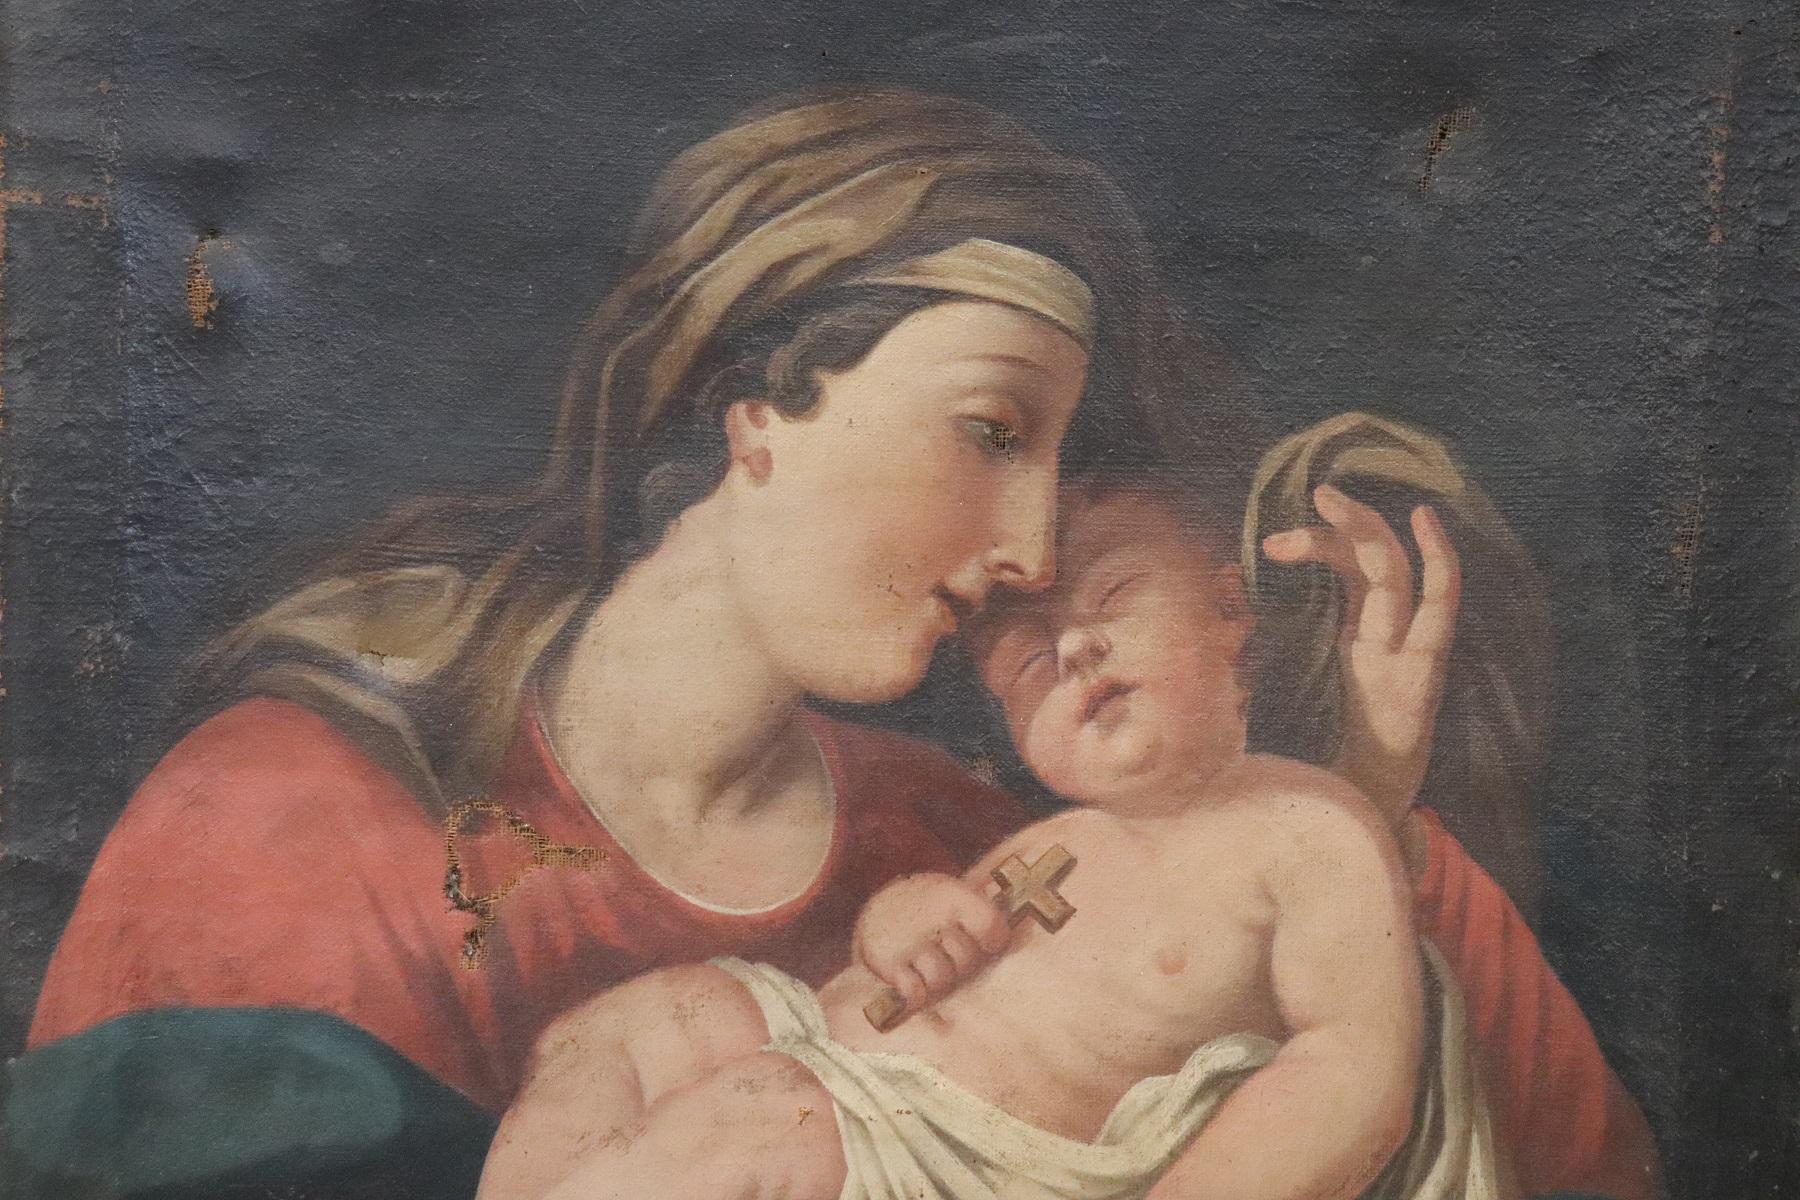 Oiled 18th Century Italian Artist Madonna with the Child Jesus